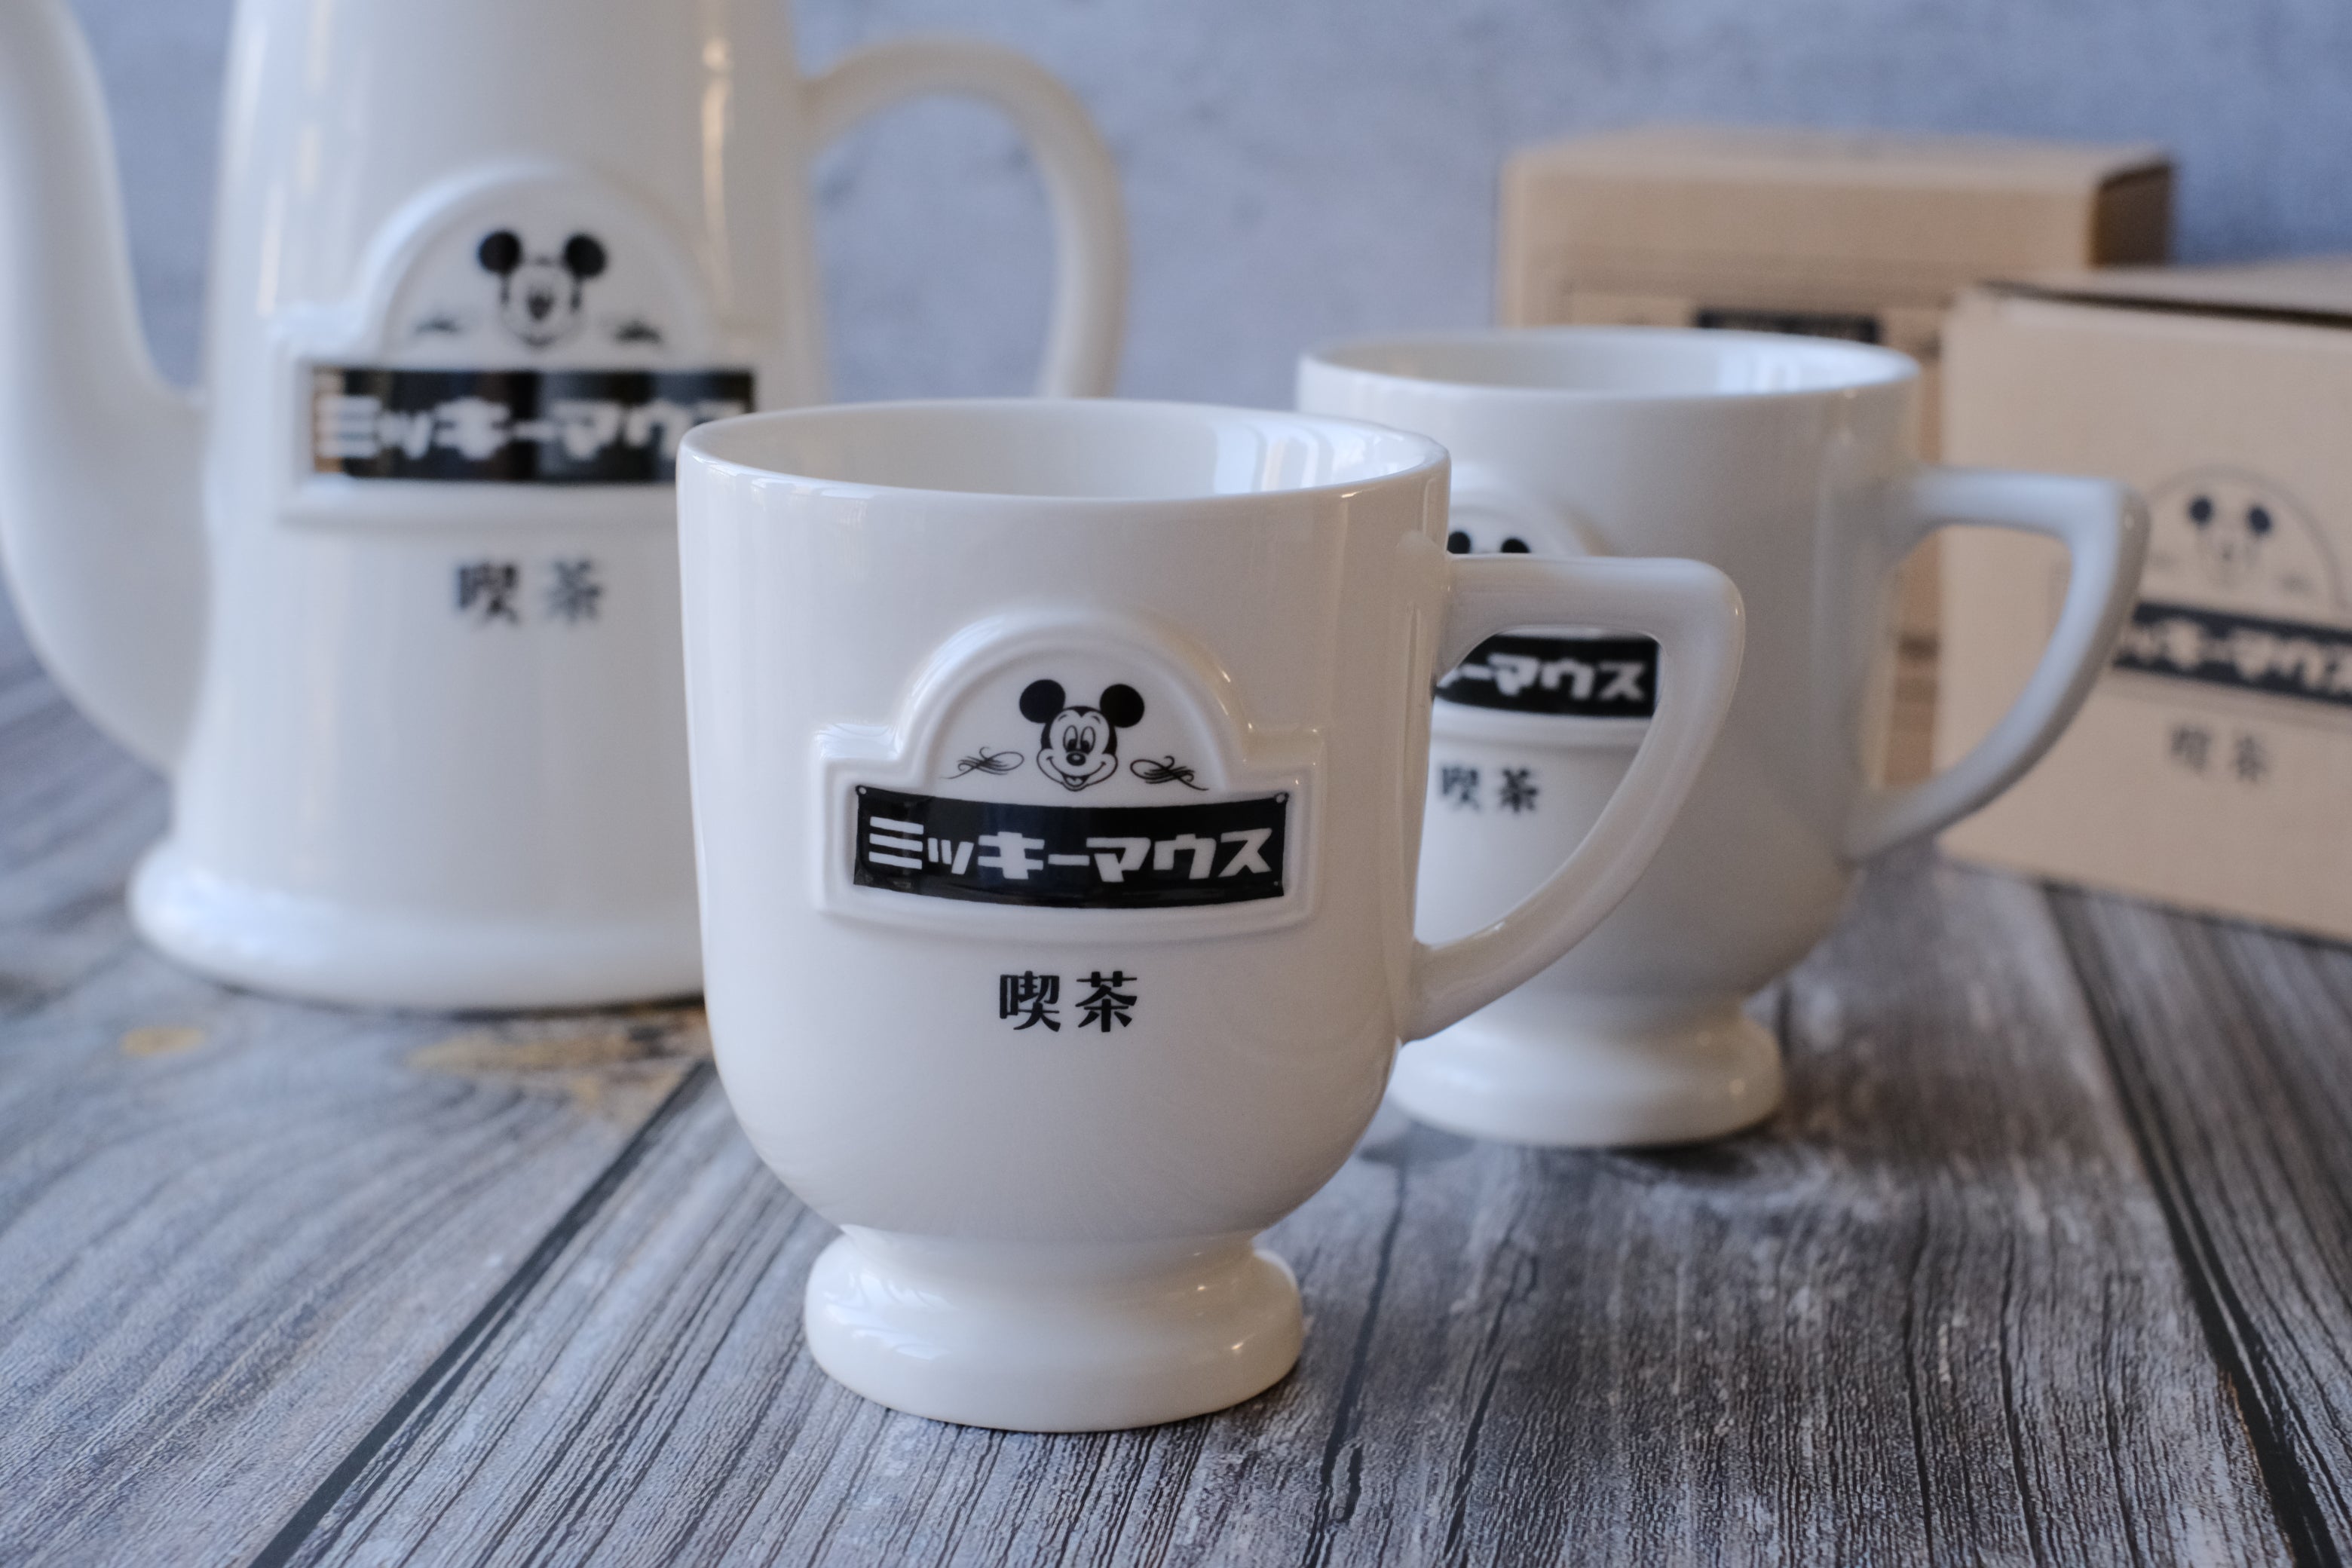 Mickey Mouse Coffee Mug / Vintage Mickey Mouse Mug Teacup / Retro